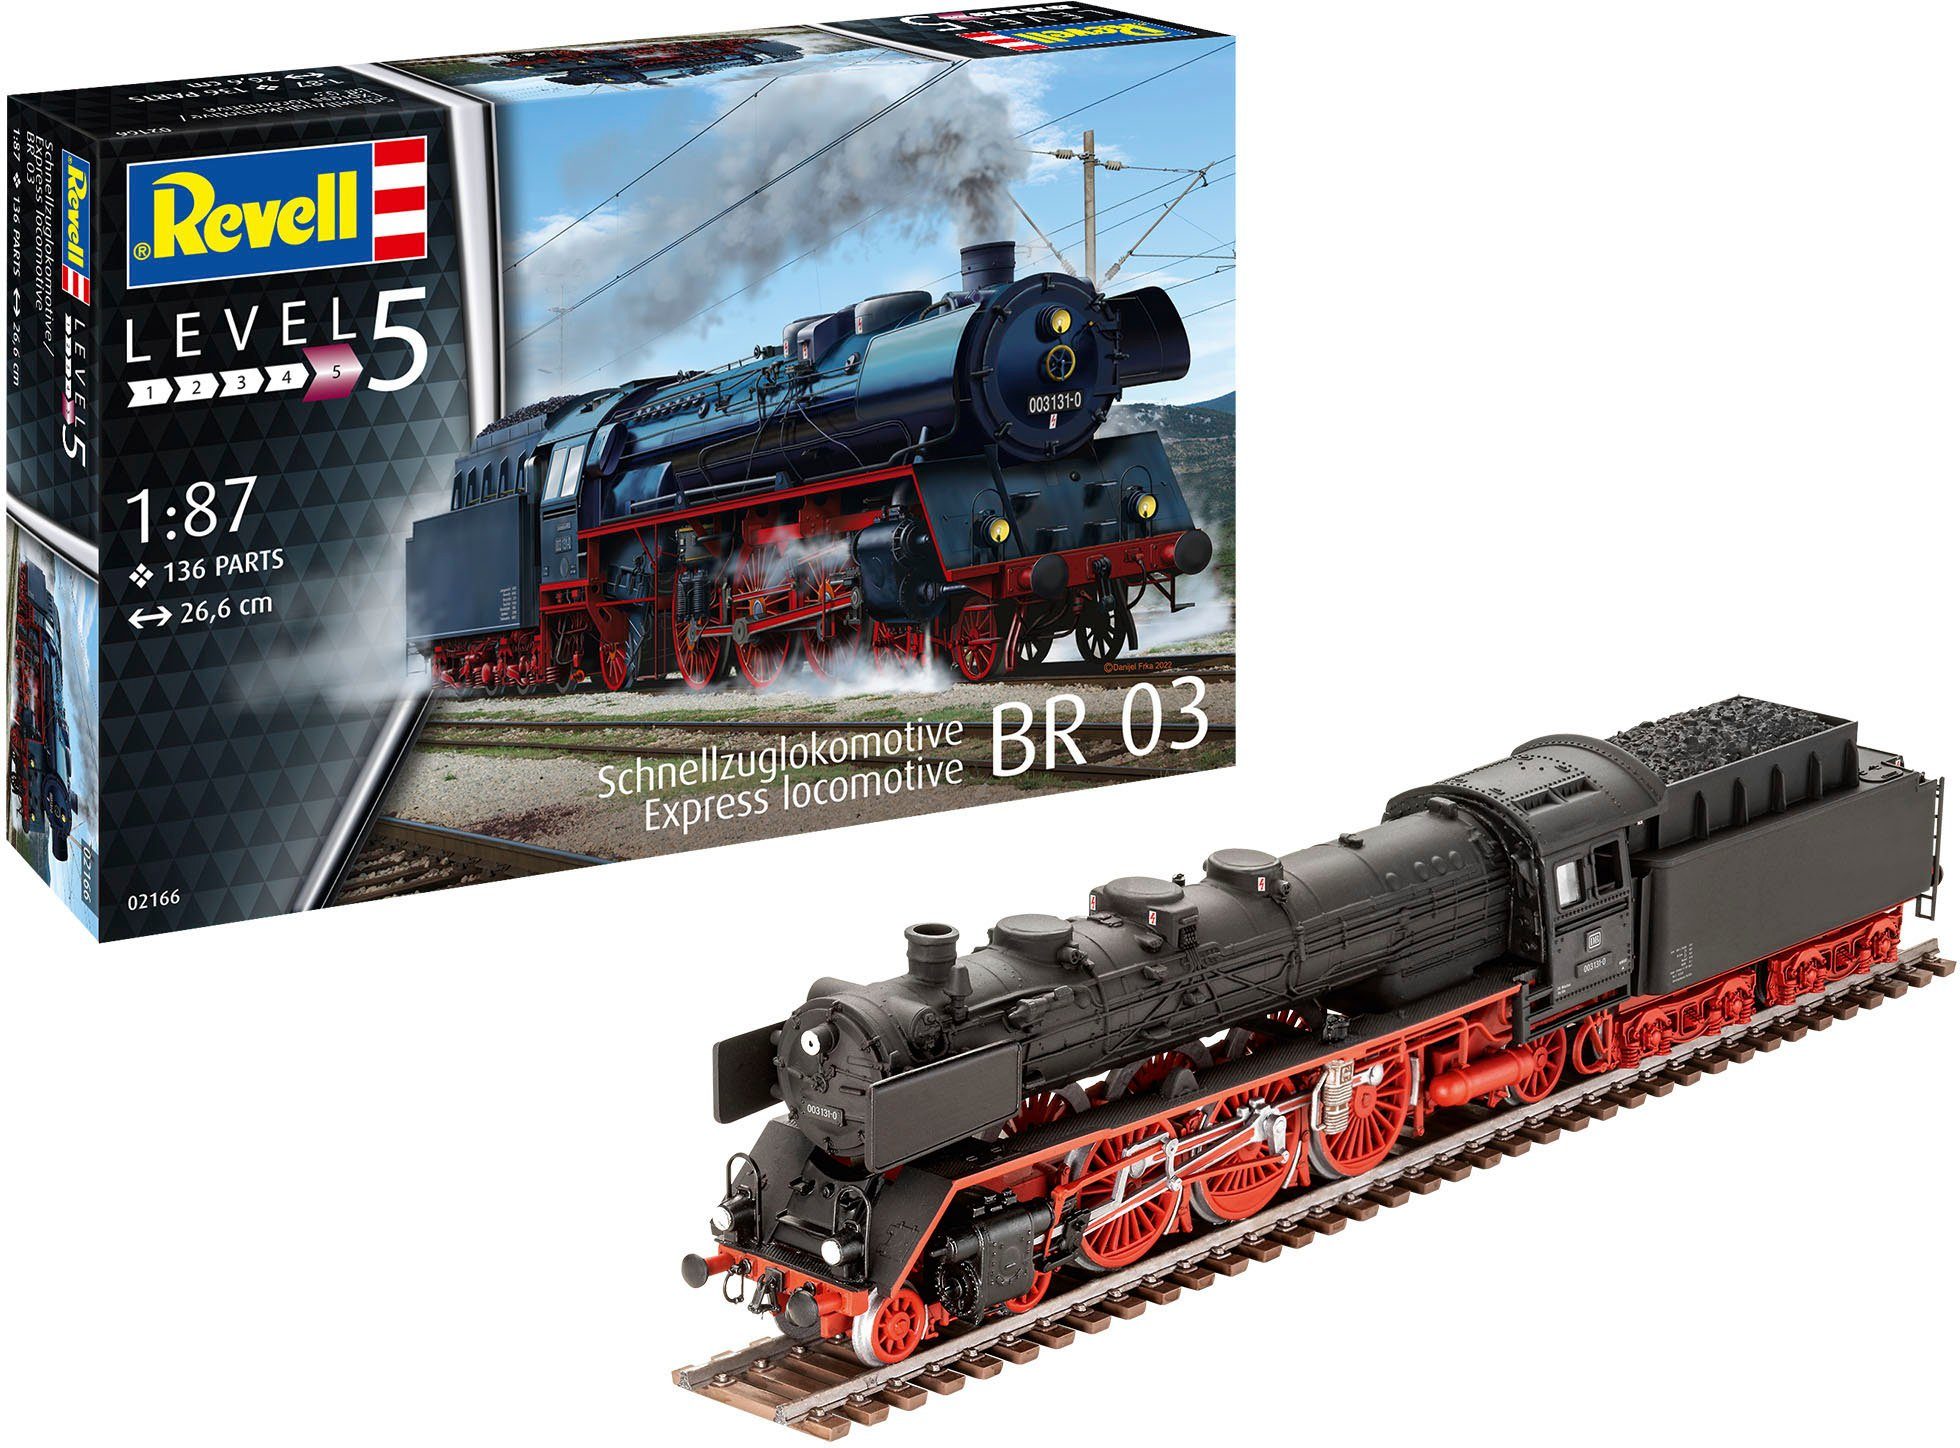 Revell® Modellbausatz H0 Schnellzuglokomotive BR03, Maßstab 1:87, Made in Europe